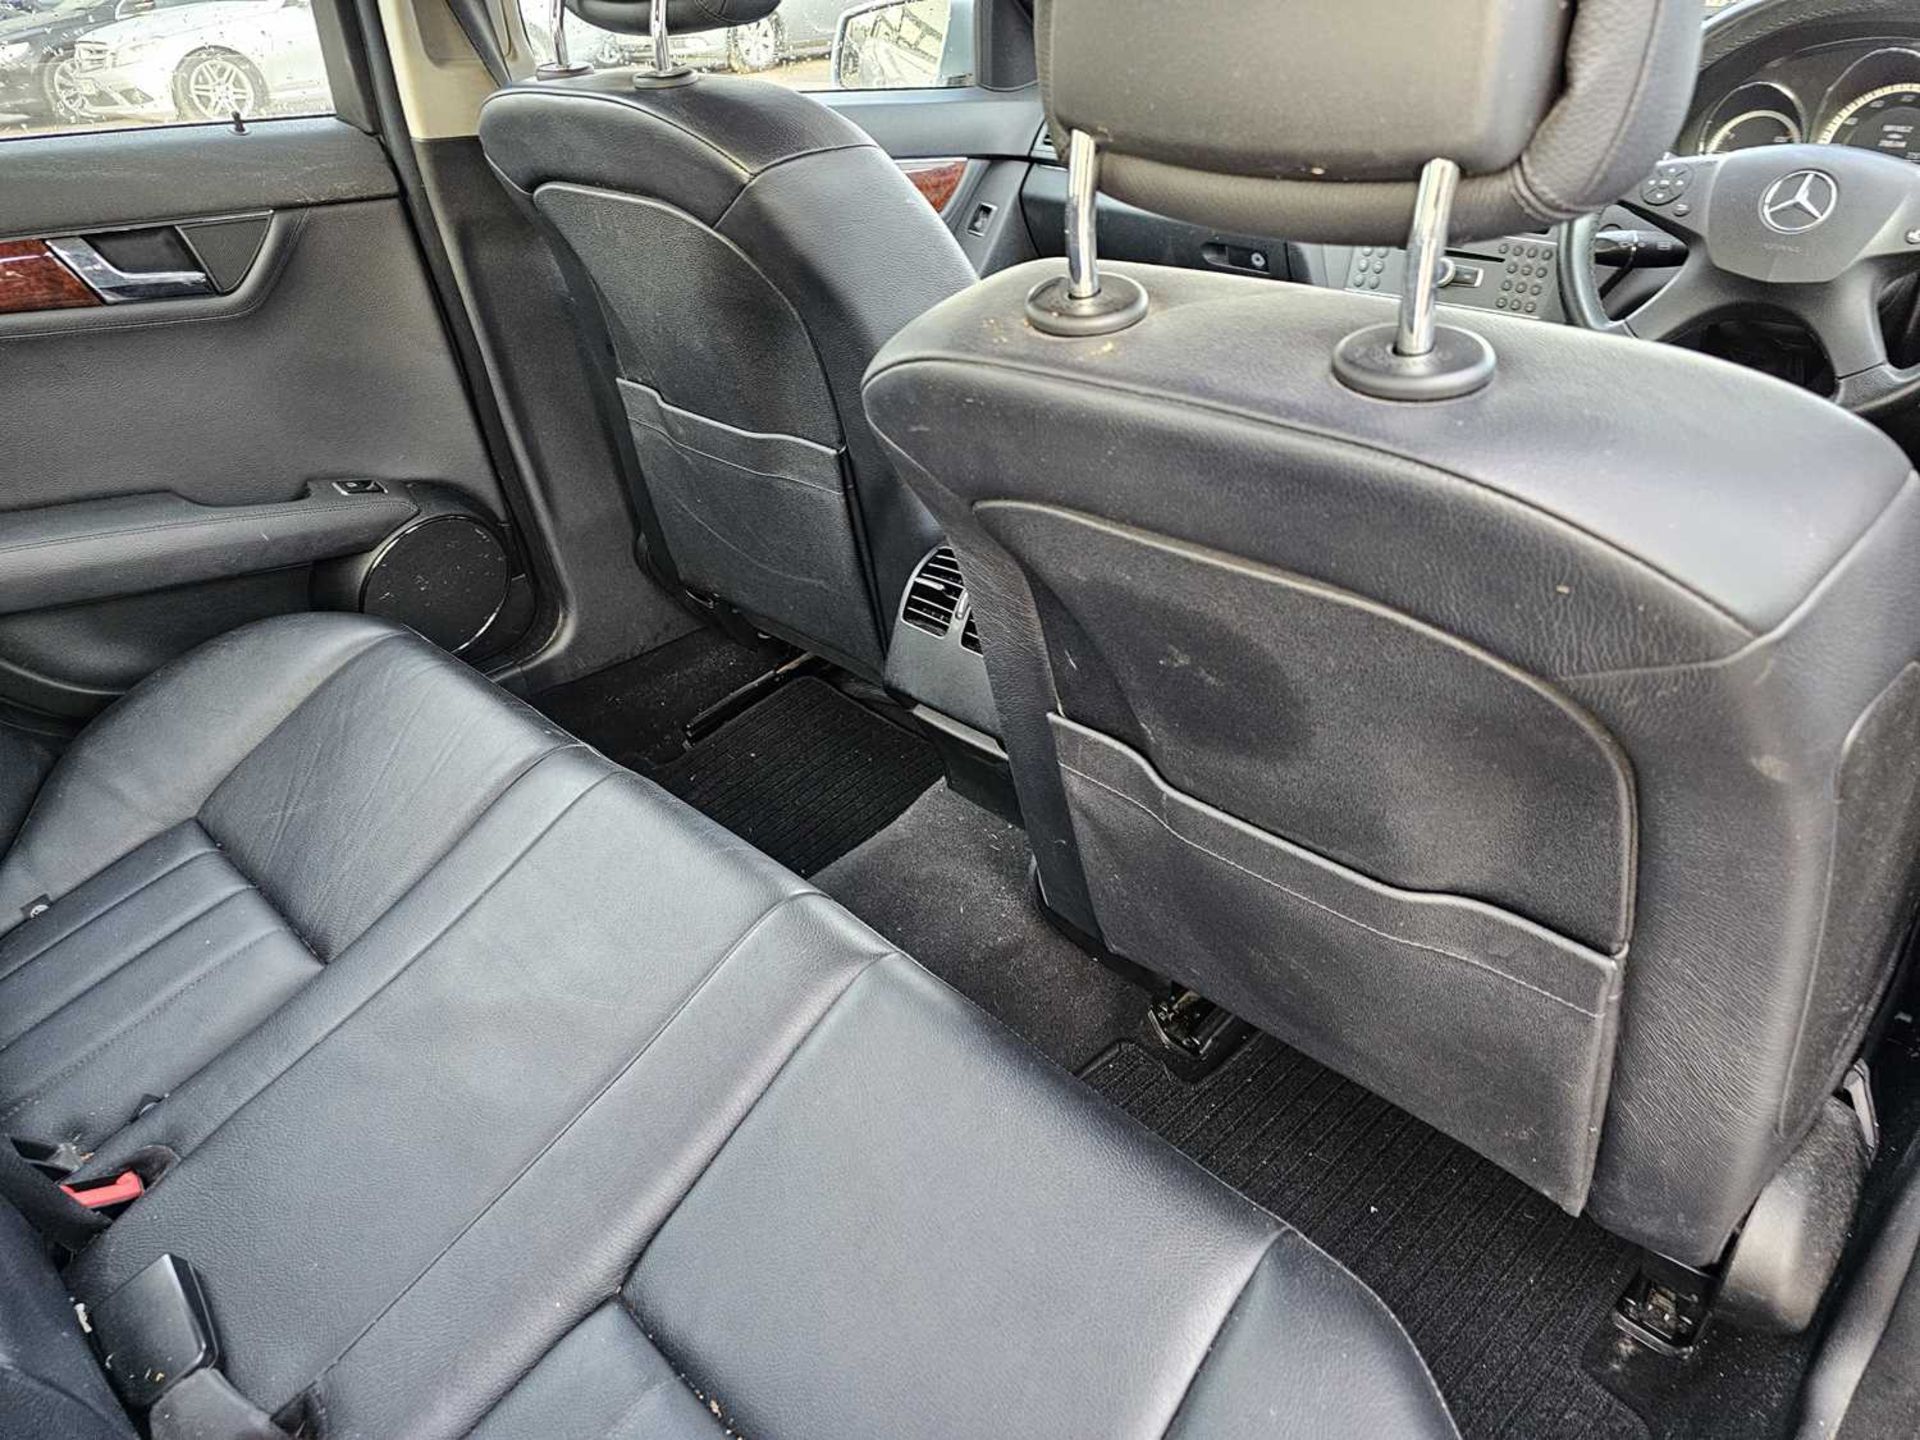 2011 Mercedes C250 Avantgarde CDi, Auto, Parking Sensors, Full Leather, Heated Electric Seats, Bluet - Image 21 of 28